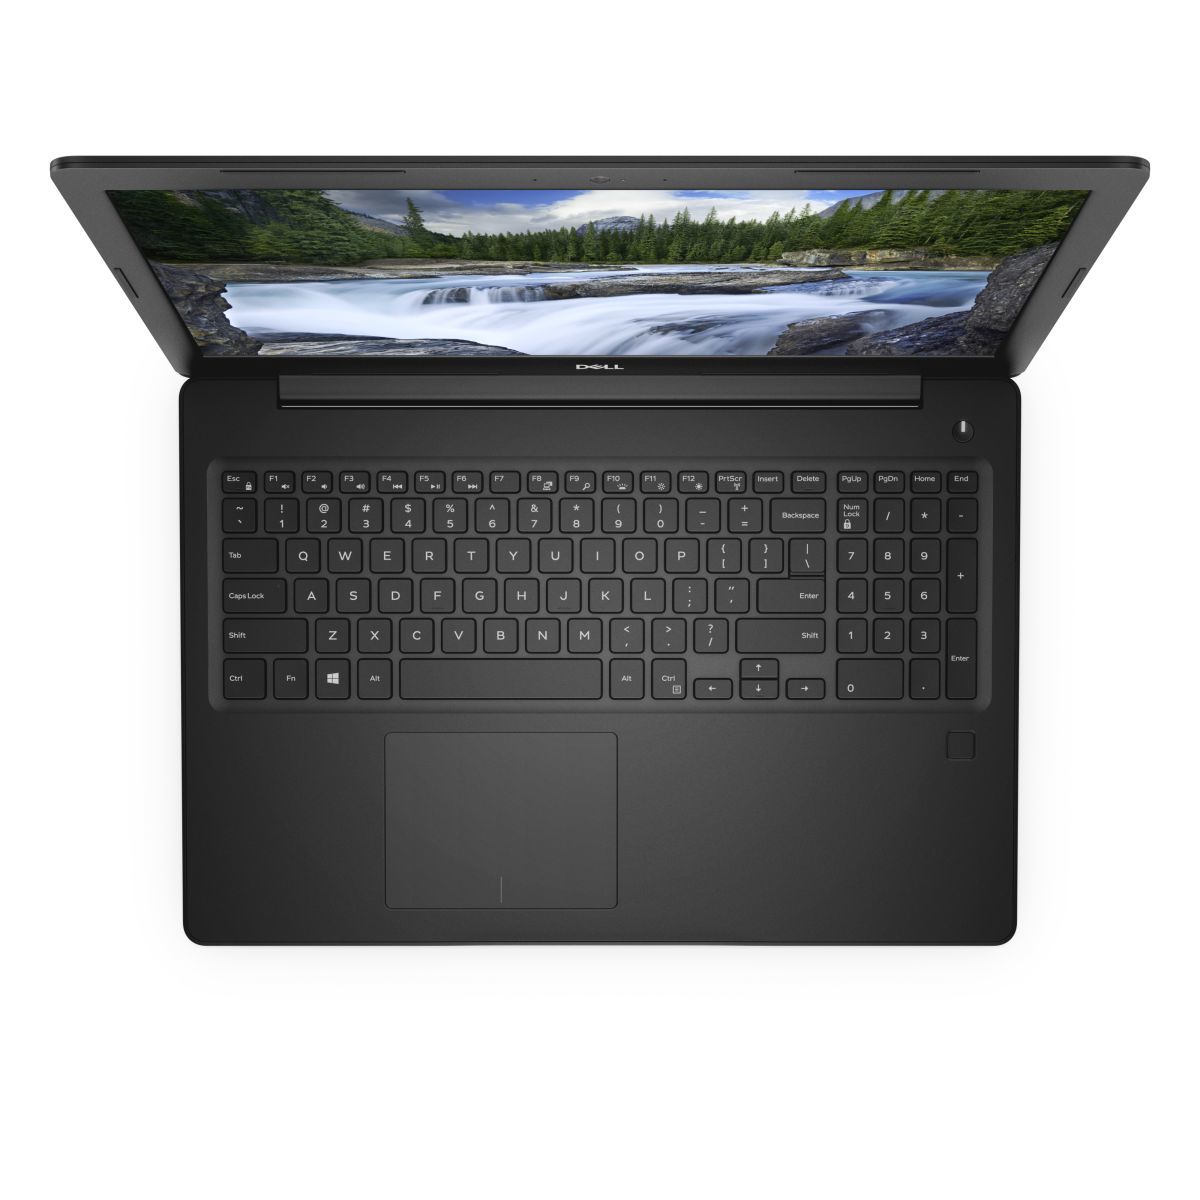 DELL Latitude 3590 - D9R2Y laptop specifications